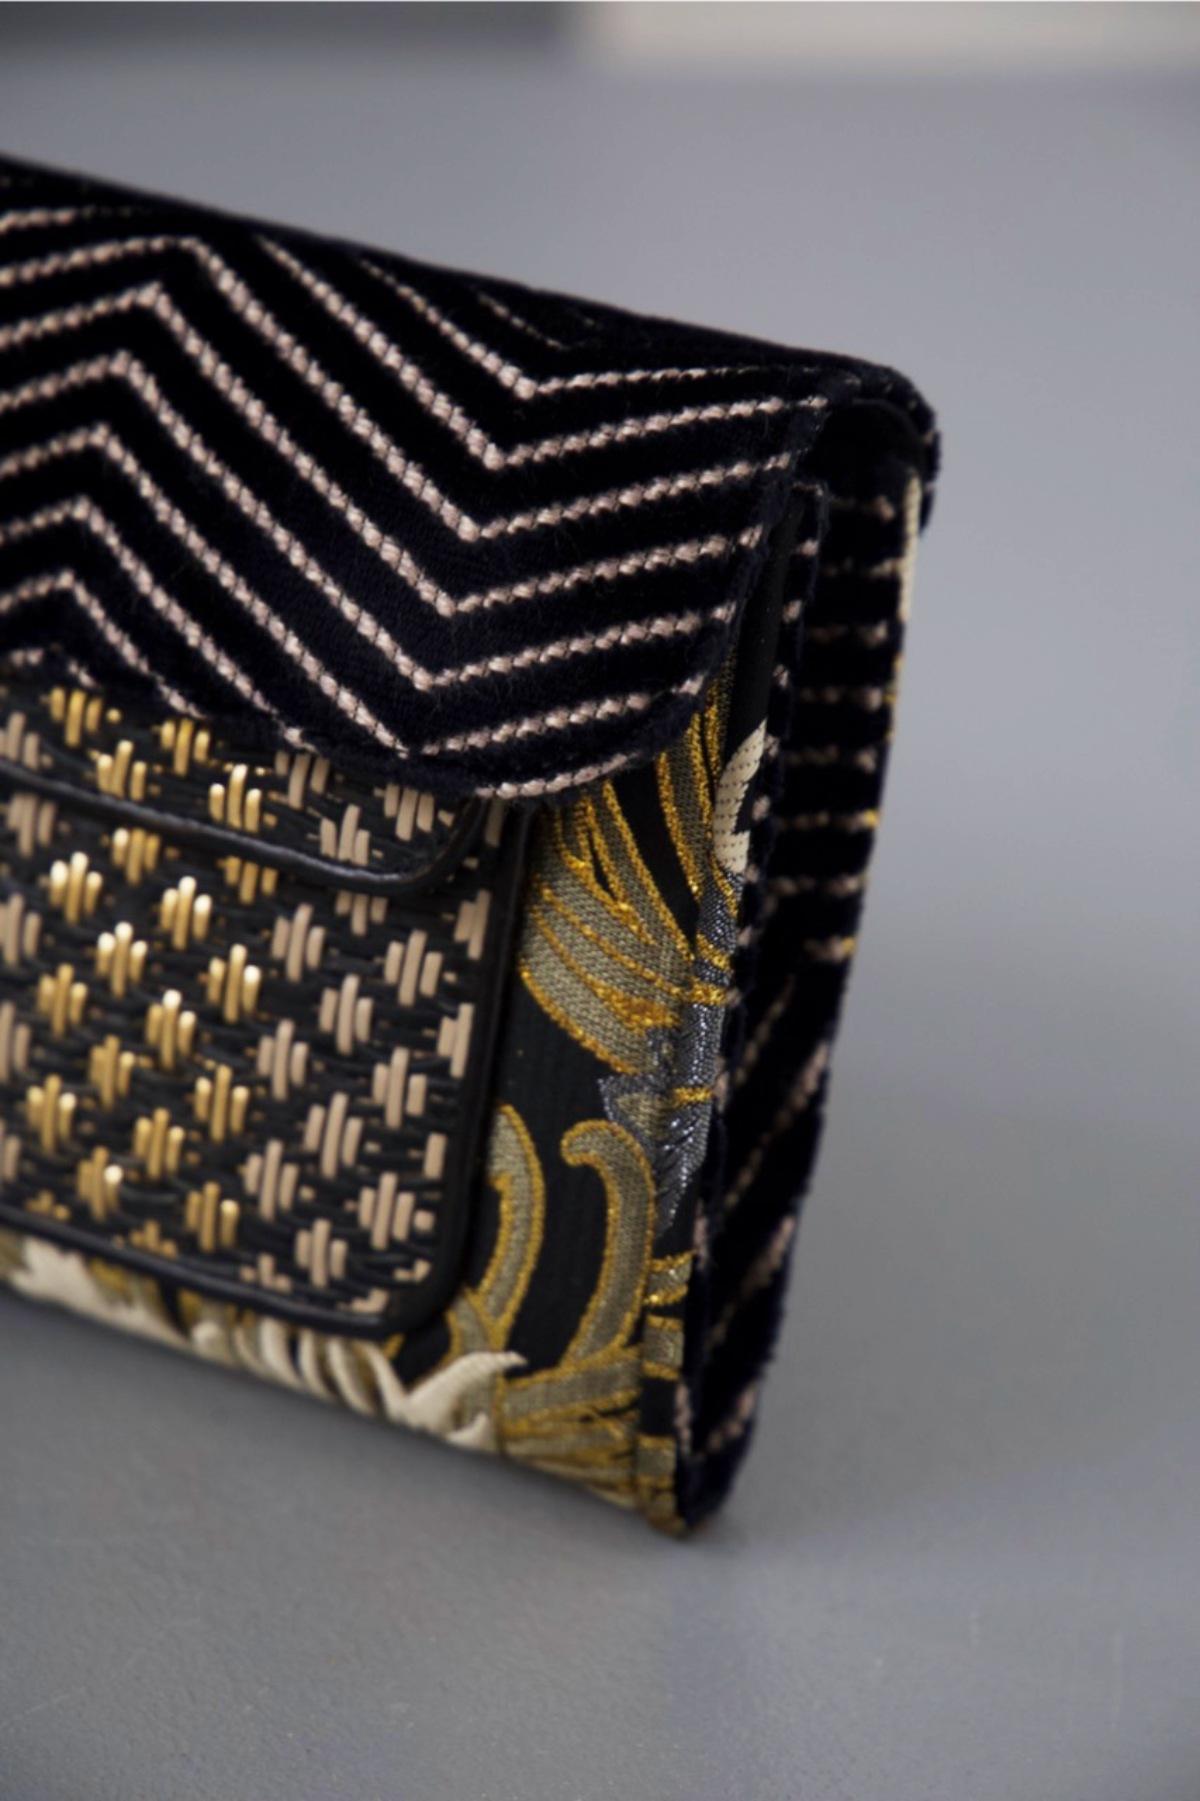 Bulgari Damen-Clutch Bag mit goldenen floralen Details 1